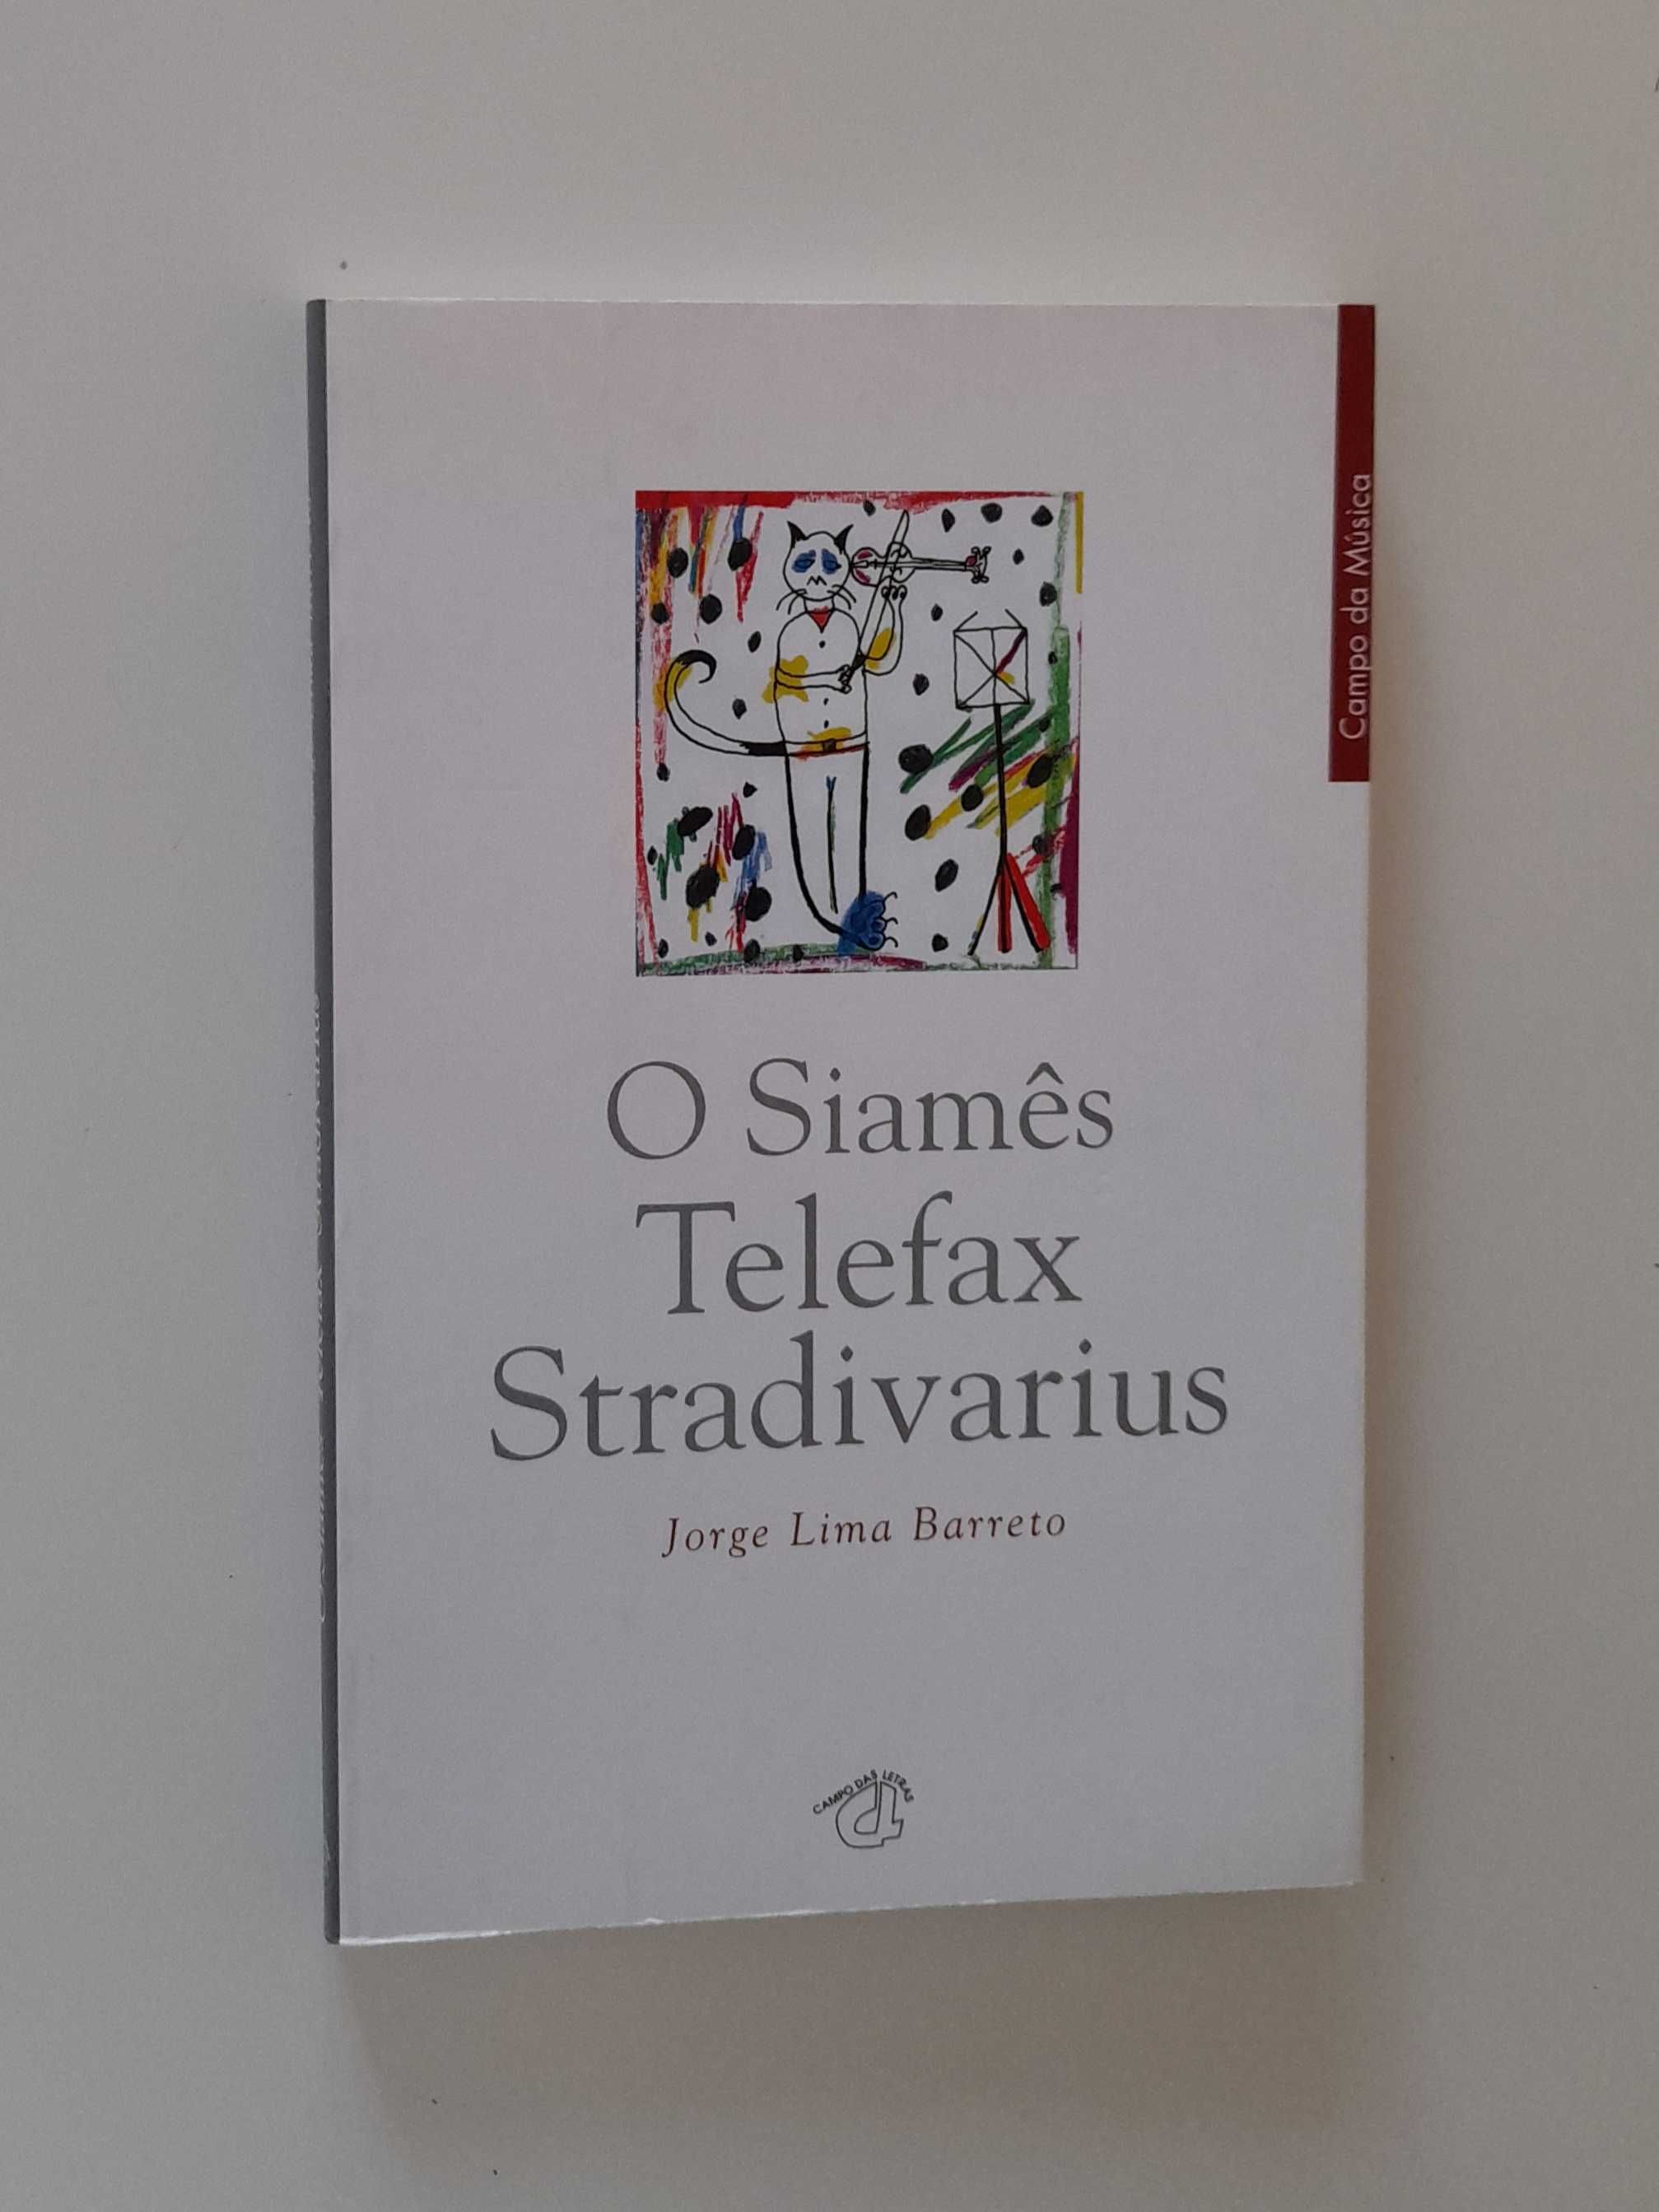 O Siamês, Telefax, Stradivarius - Jorge Lima Barreto